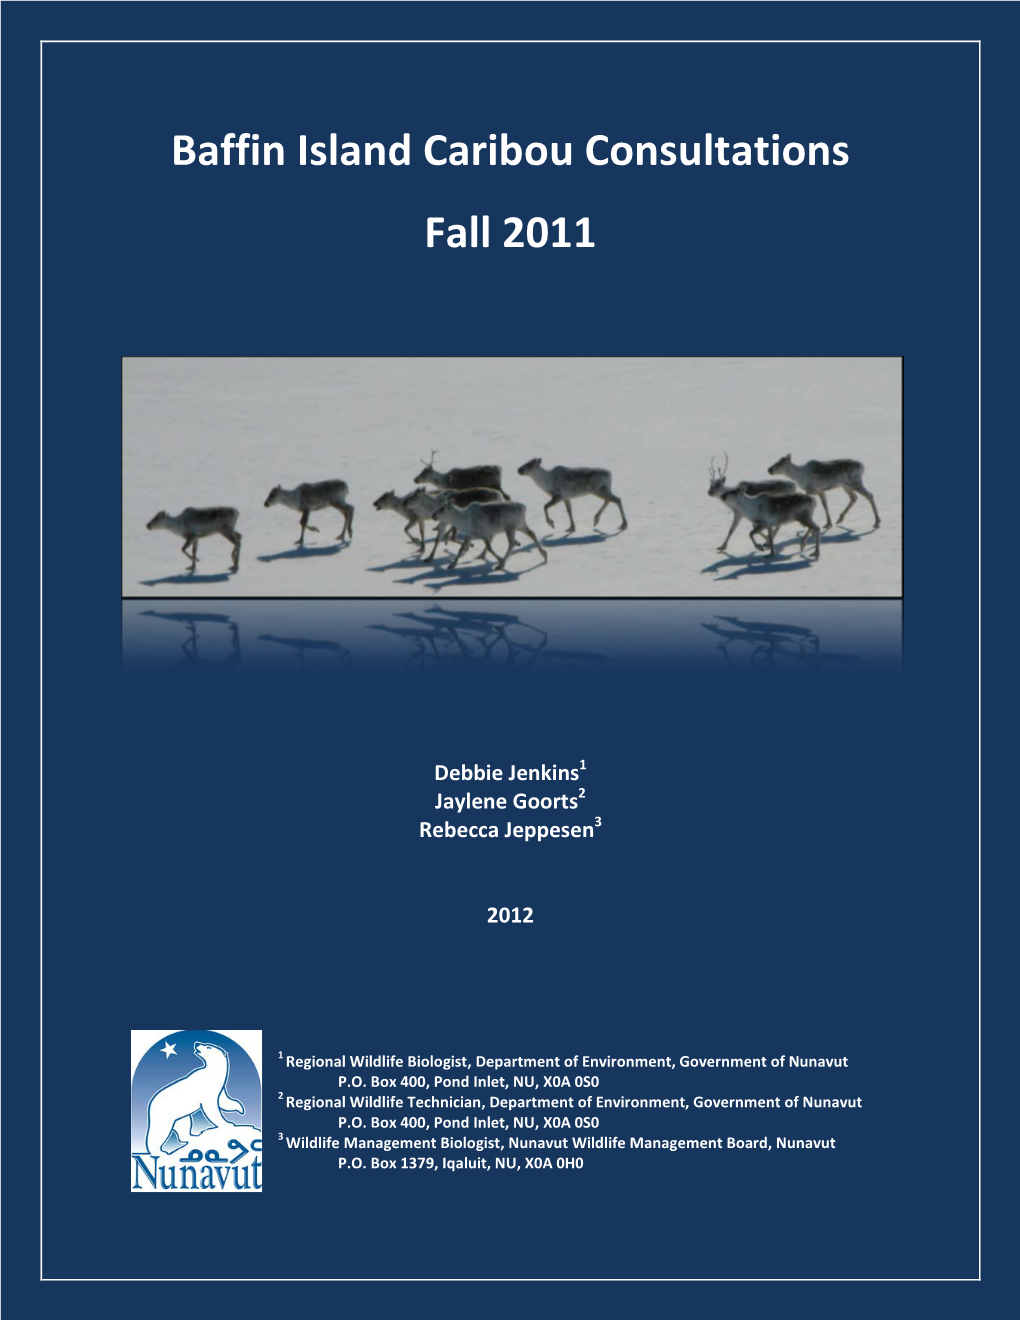 Baffin Island Caribou Consultations Fall 2011